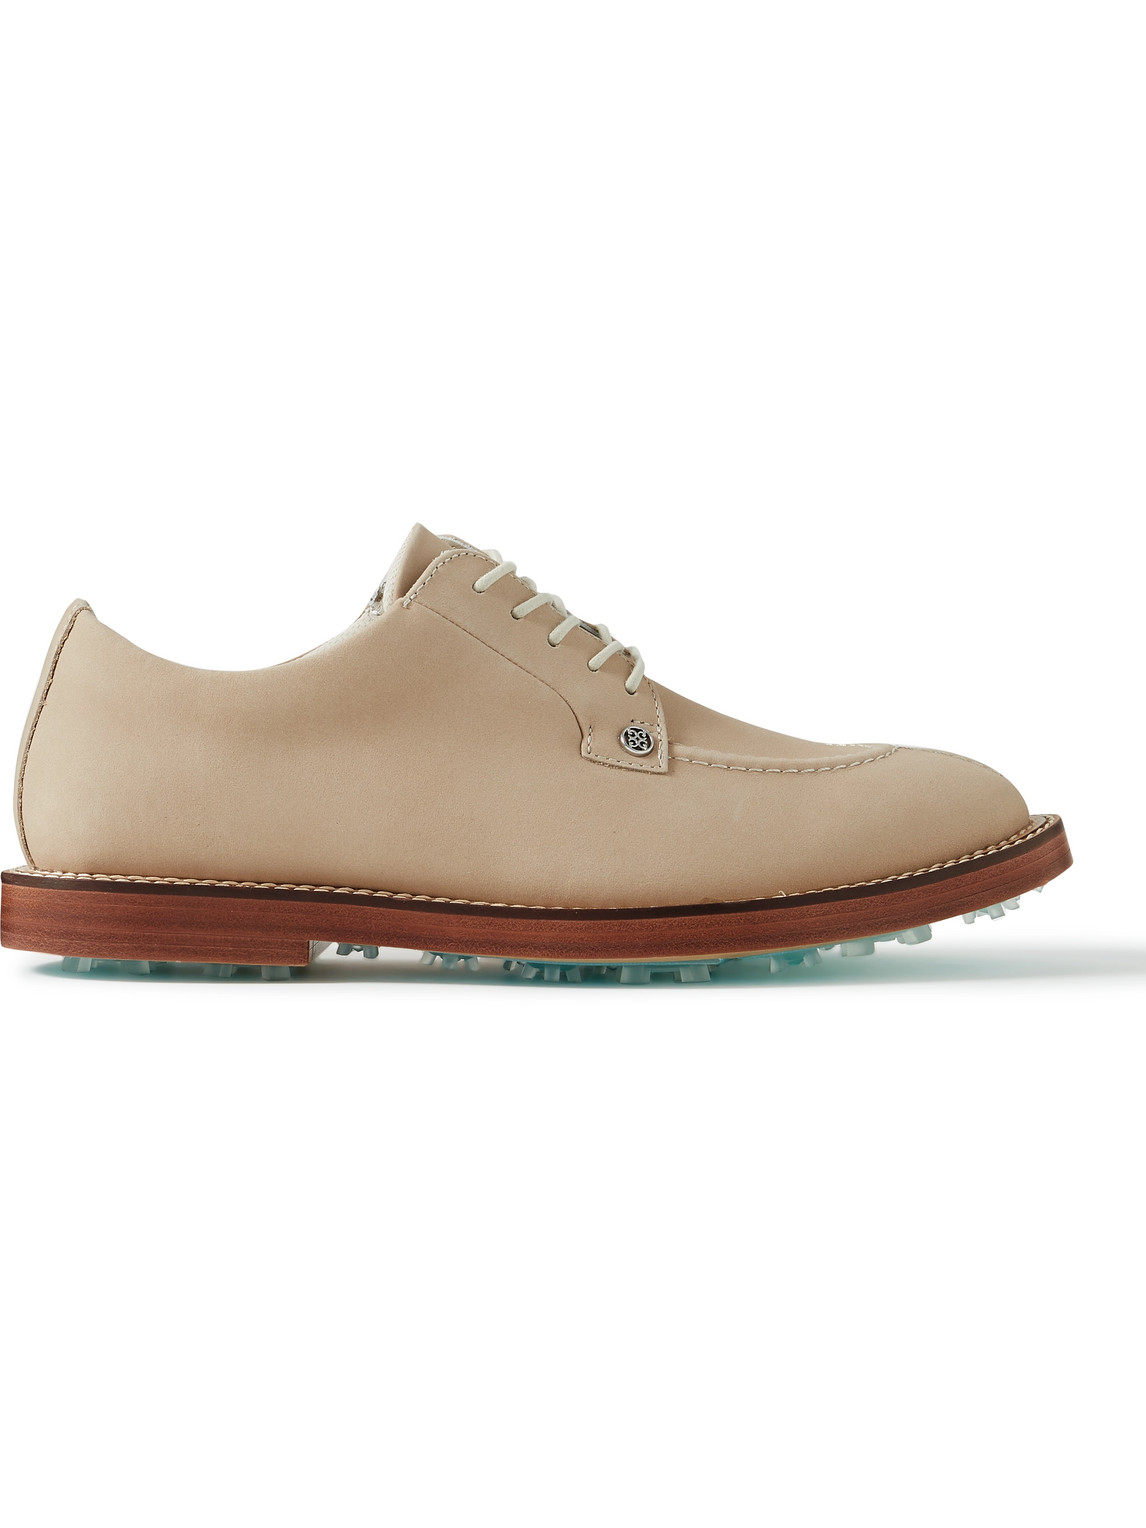 G/FORE Gallivanter Apron-Toe Nubuck Golf Shoes